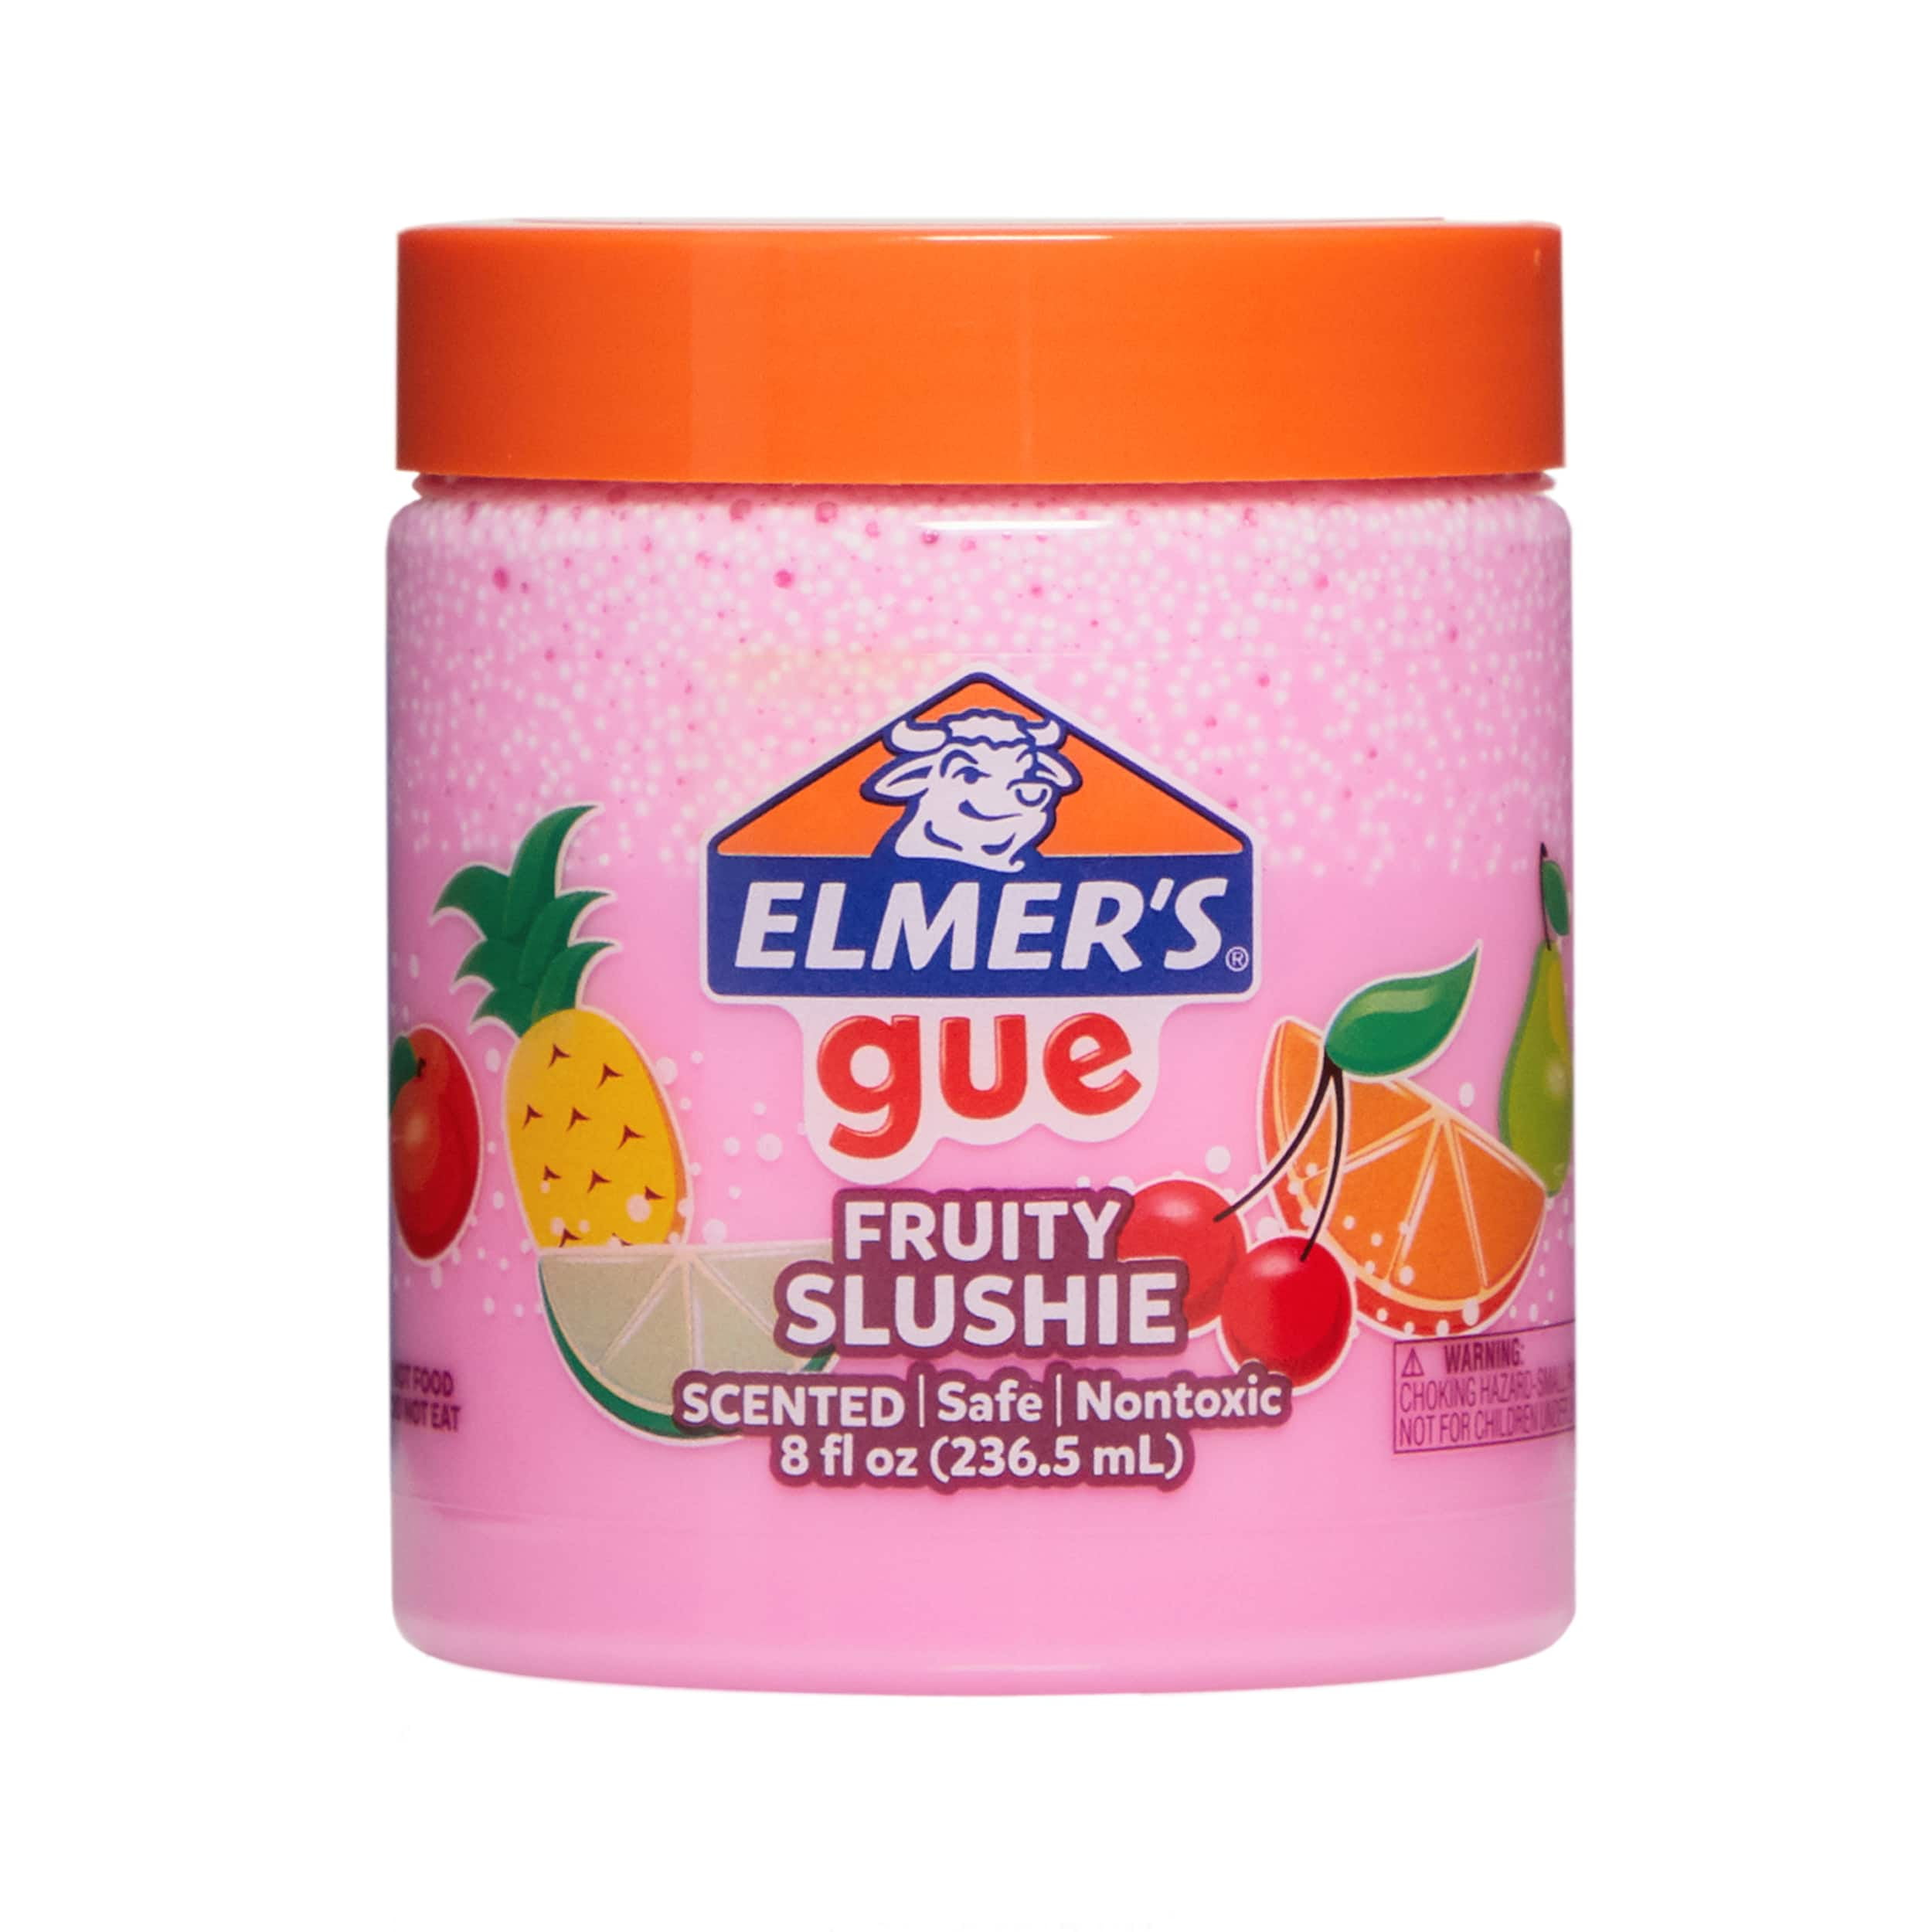 Elmer's Metallic Slime Kit: Supplies Include Metallic Glue, Elmer